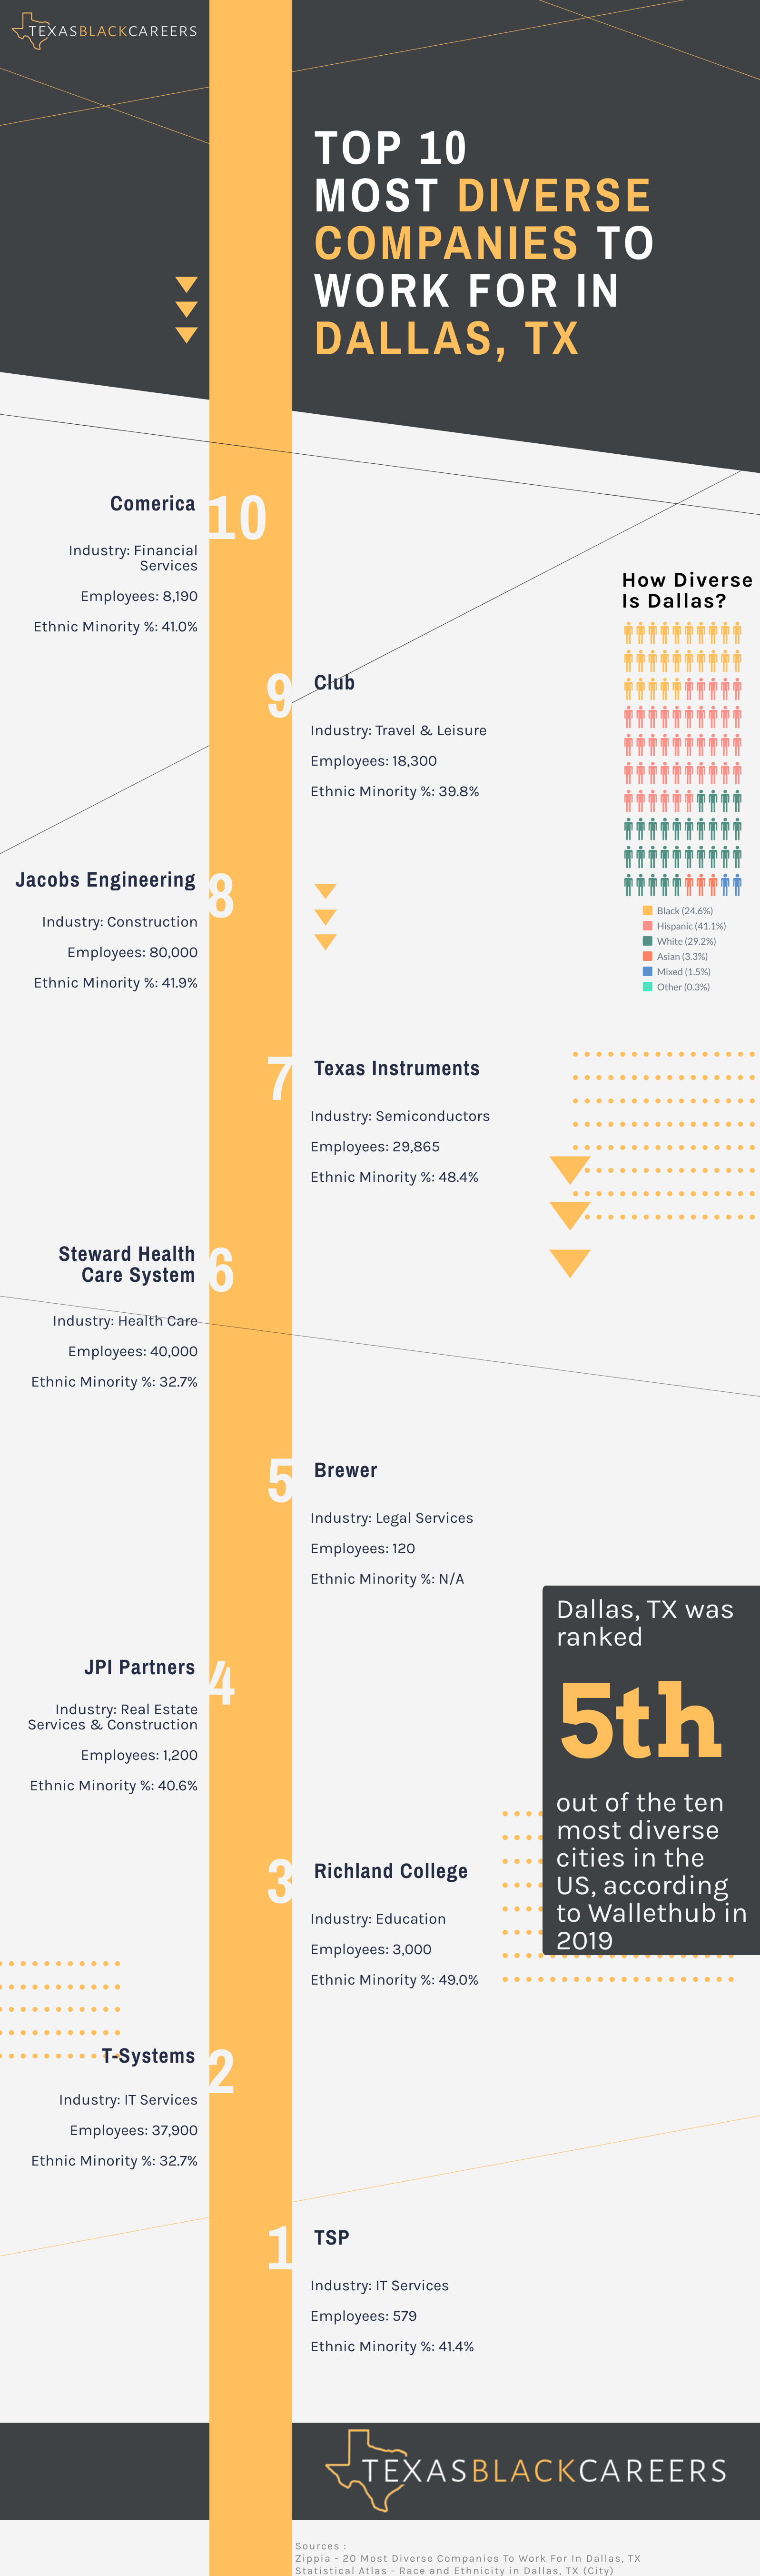 Top Diverse Companies in Dallas